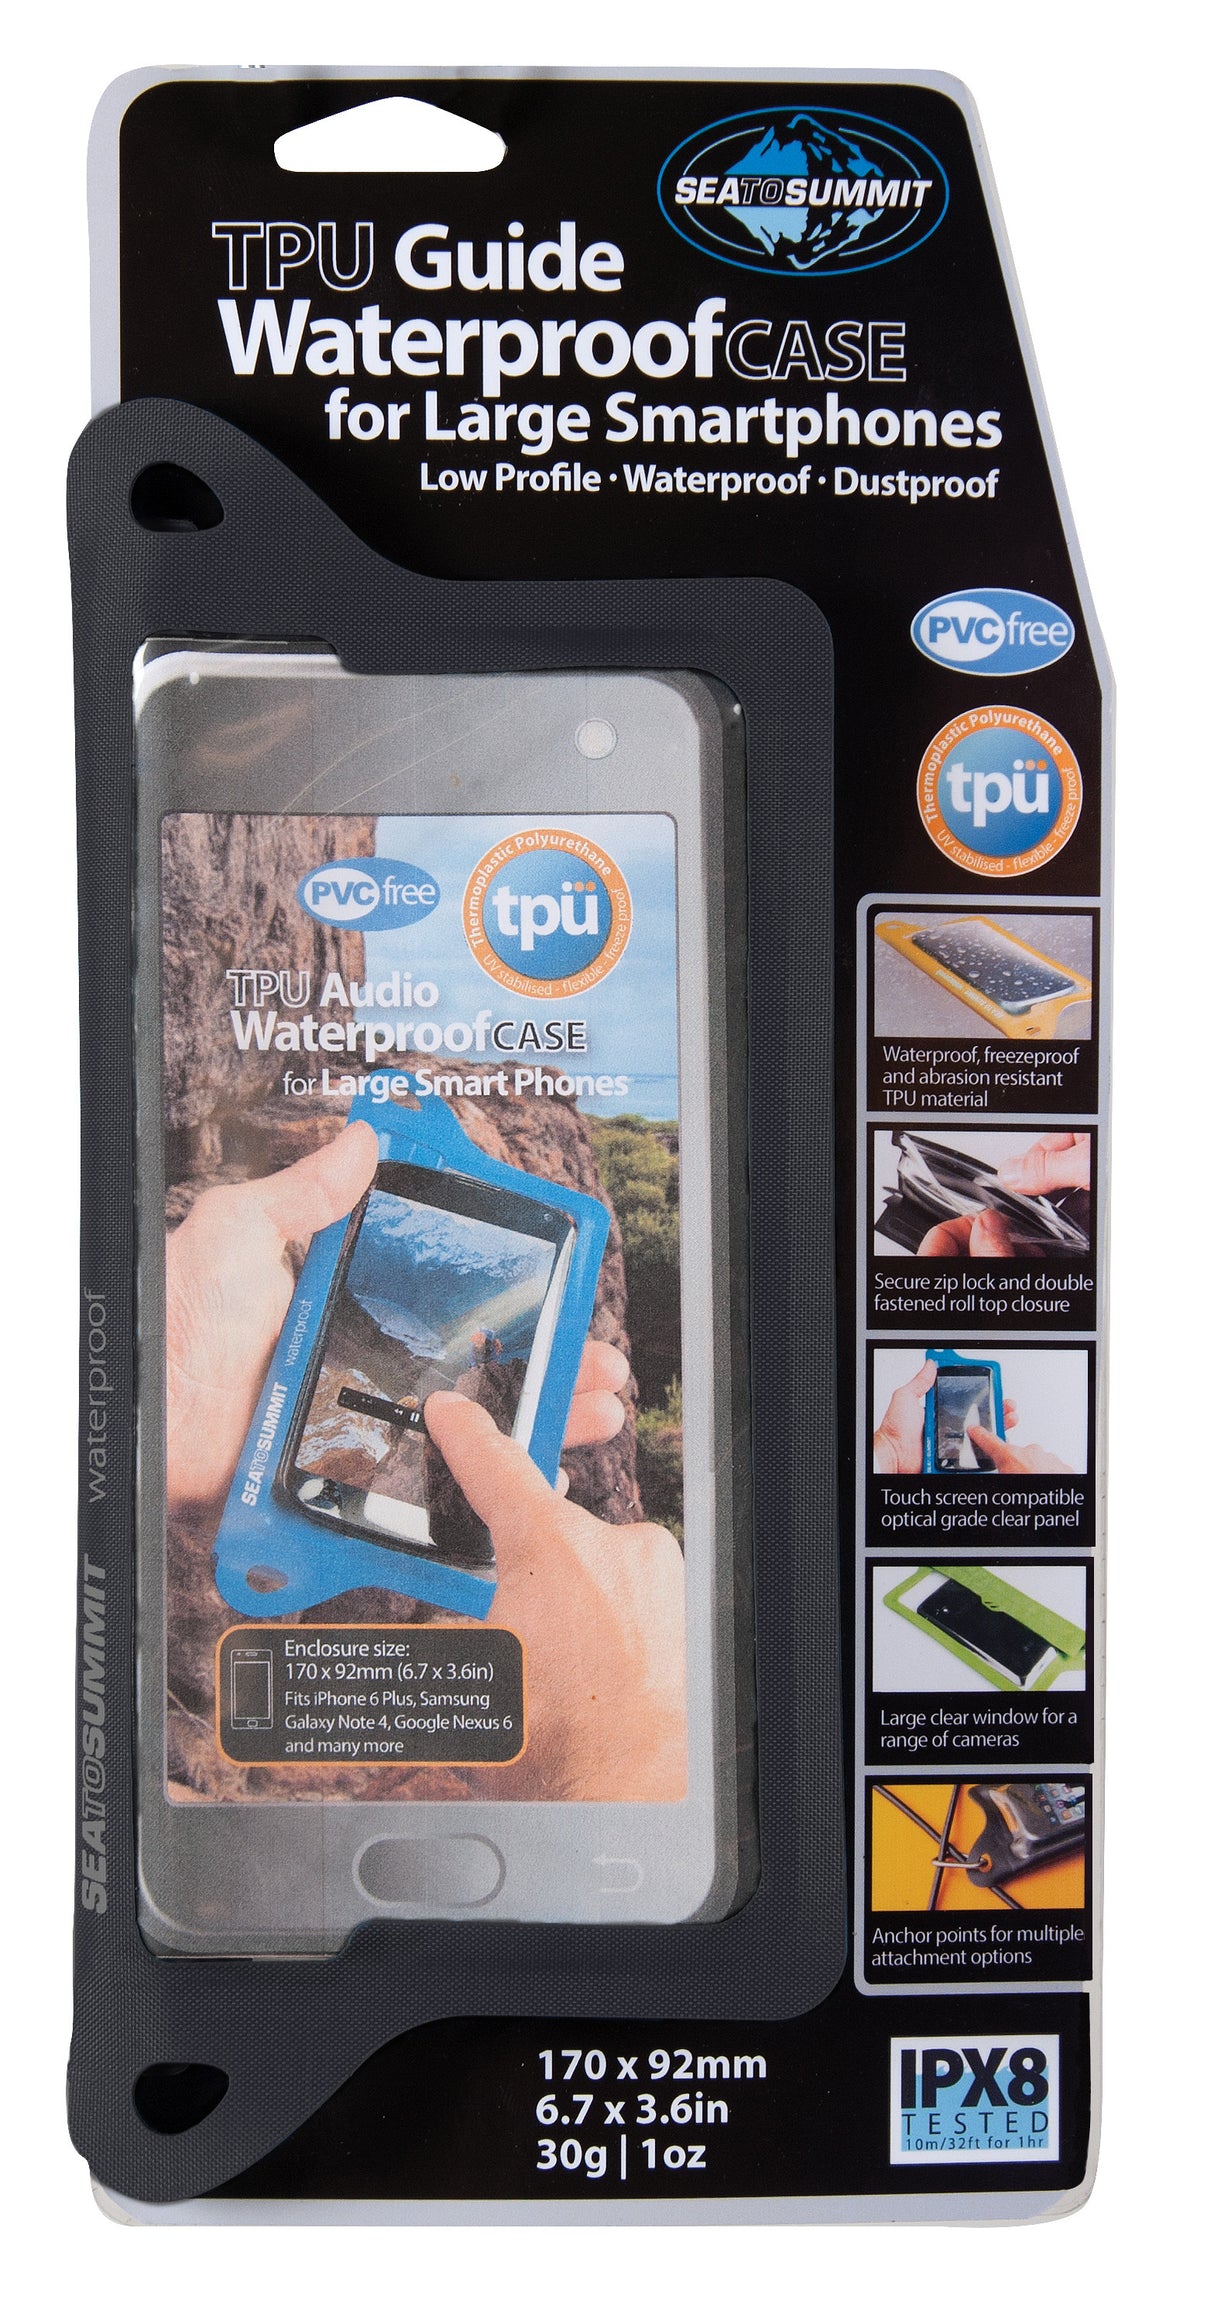 TPU Guide Waterproof Case for Smartphones